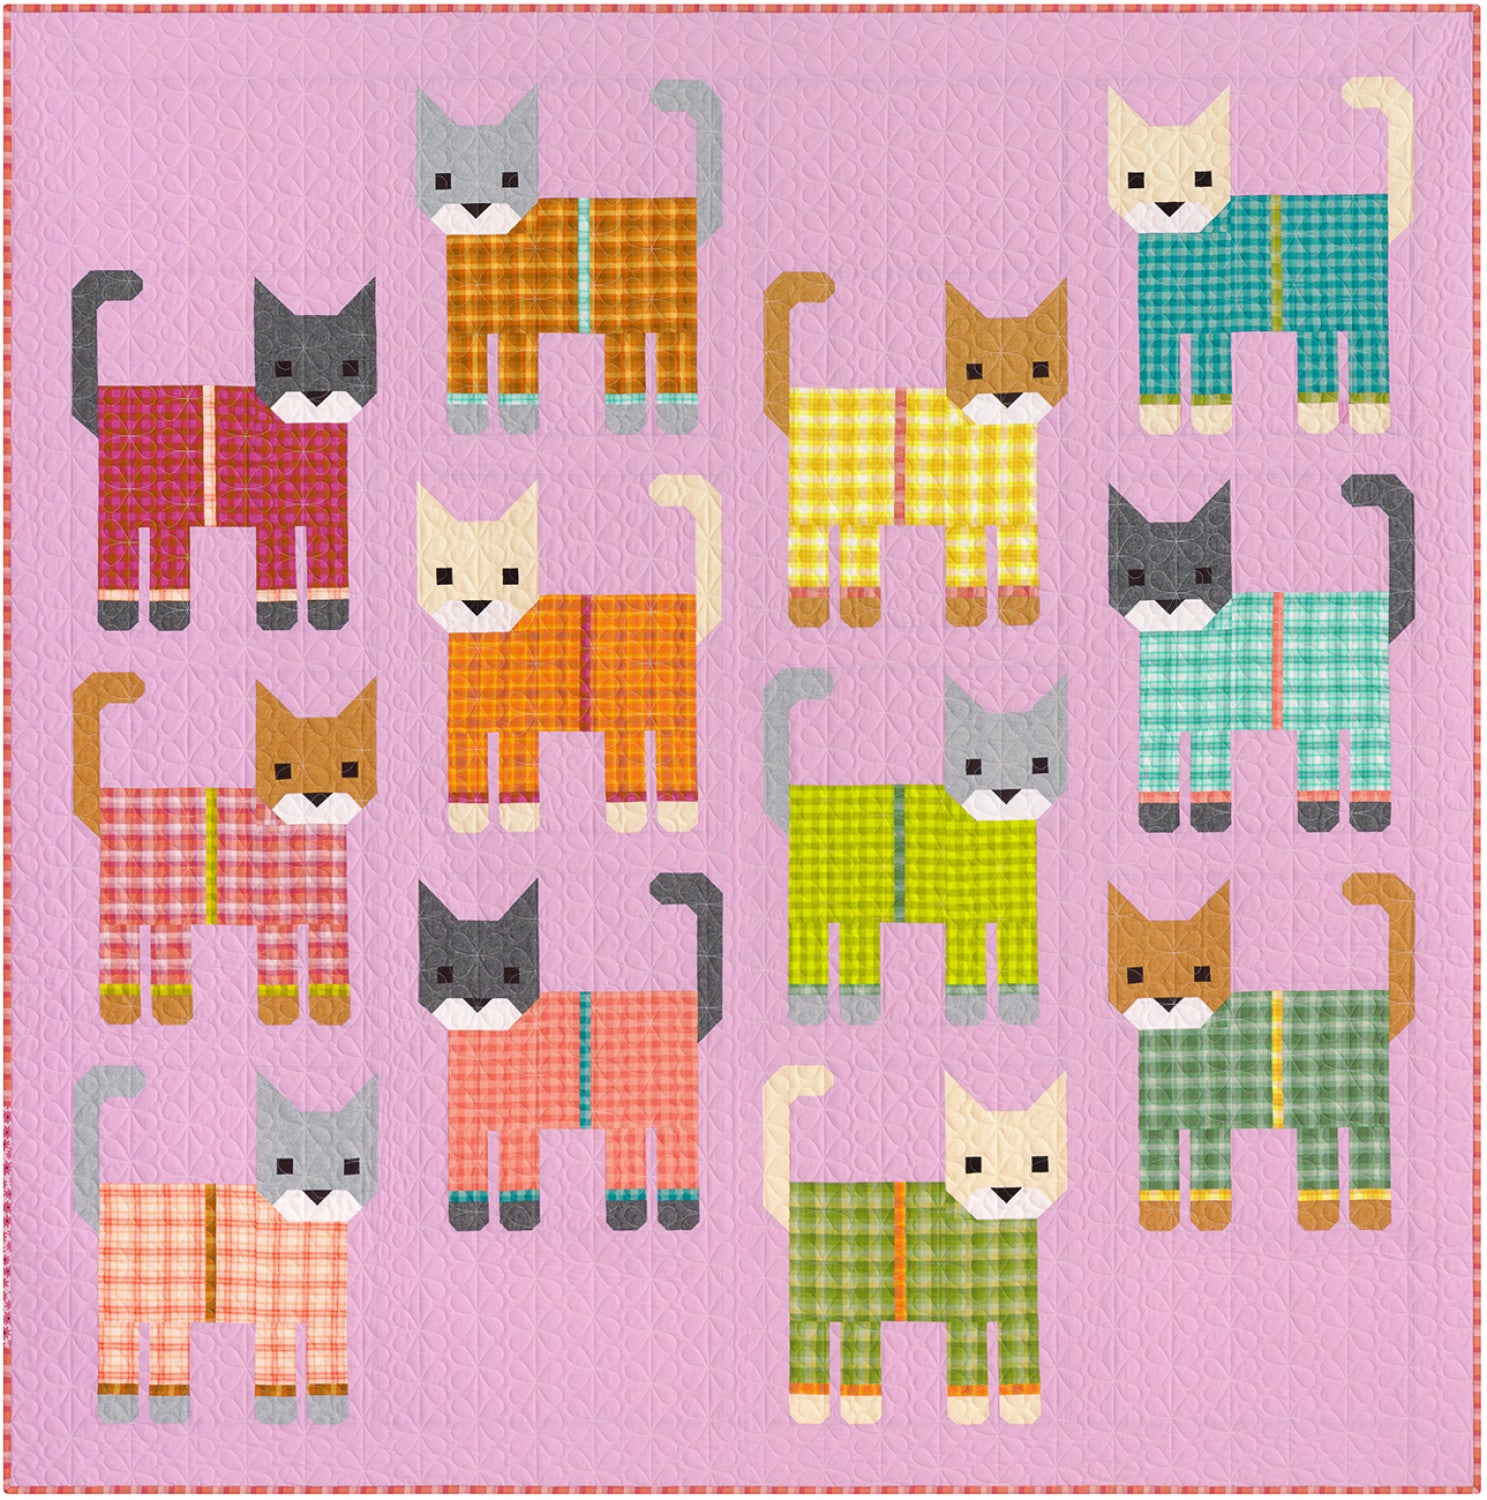 Cats in Pajamas Quilt Kit - Kitchen Window Wovens by Elizabeth Hartman (72"x72)